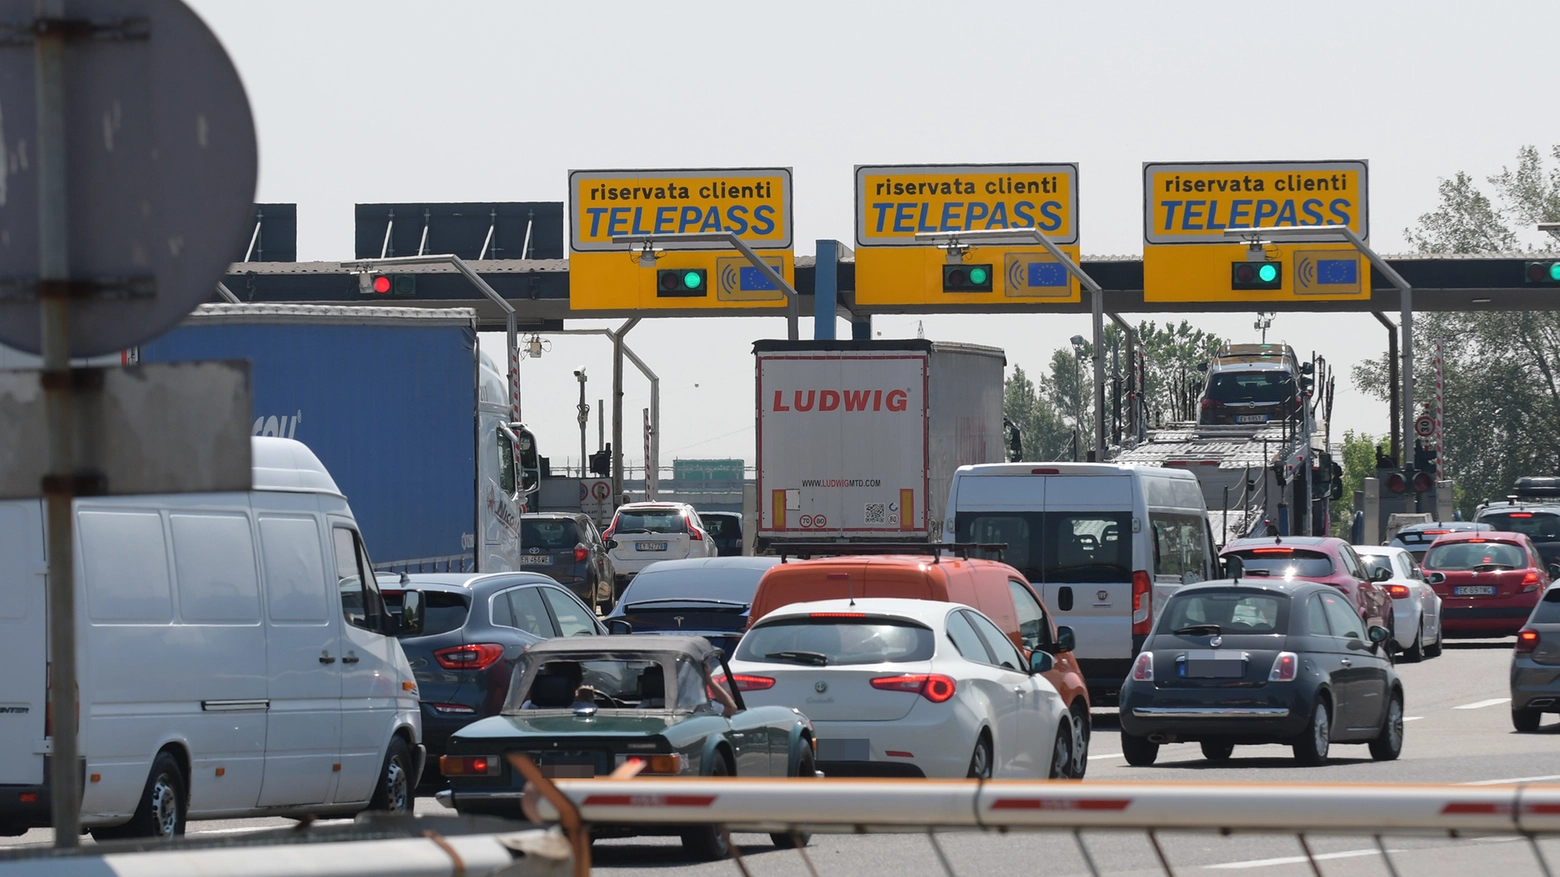 Bonus pedaggi autostradali per autotrasportatori: le regole e le scadenze